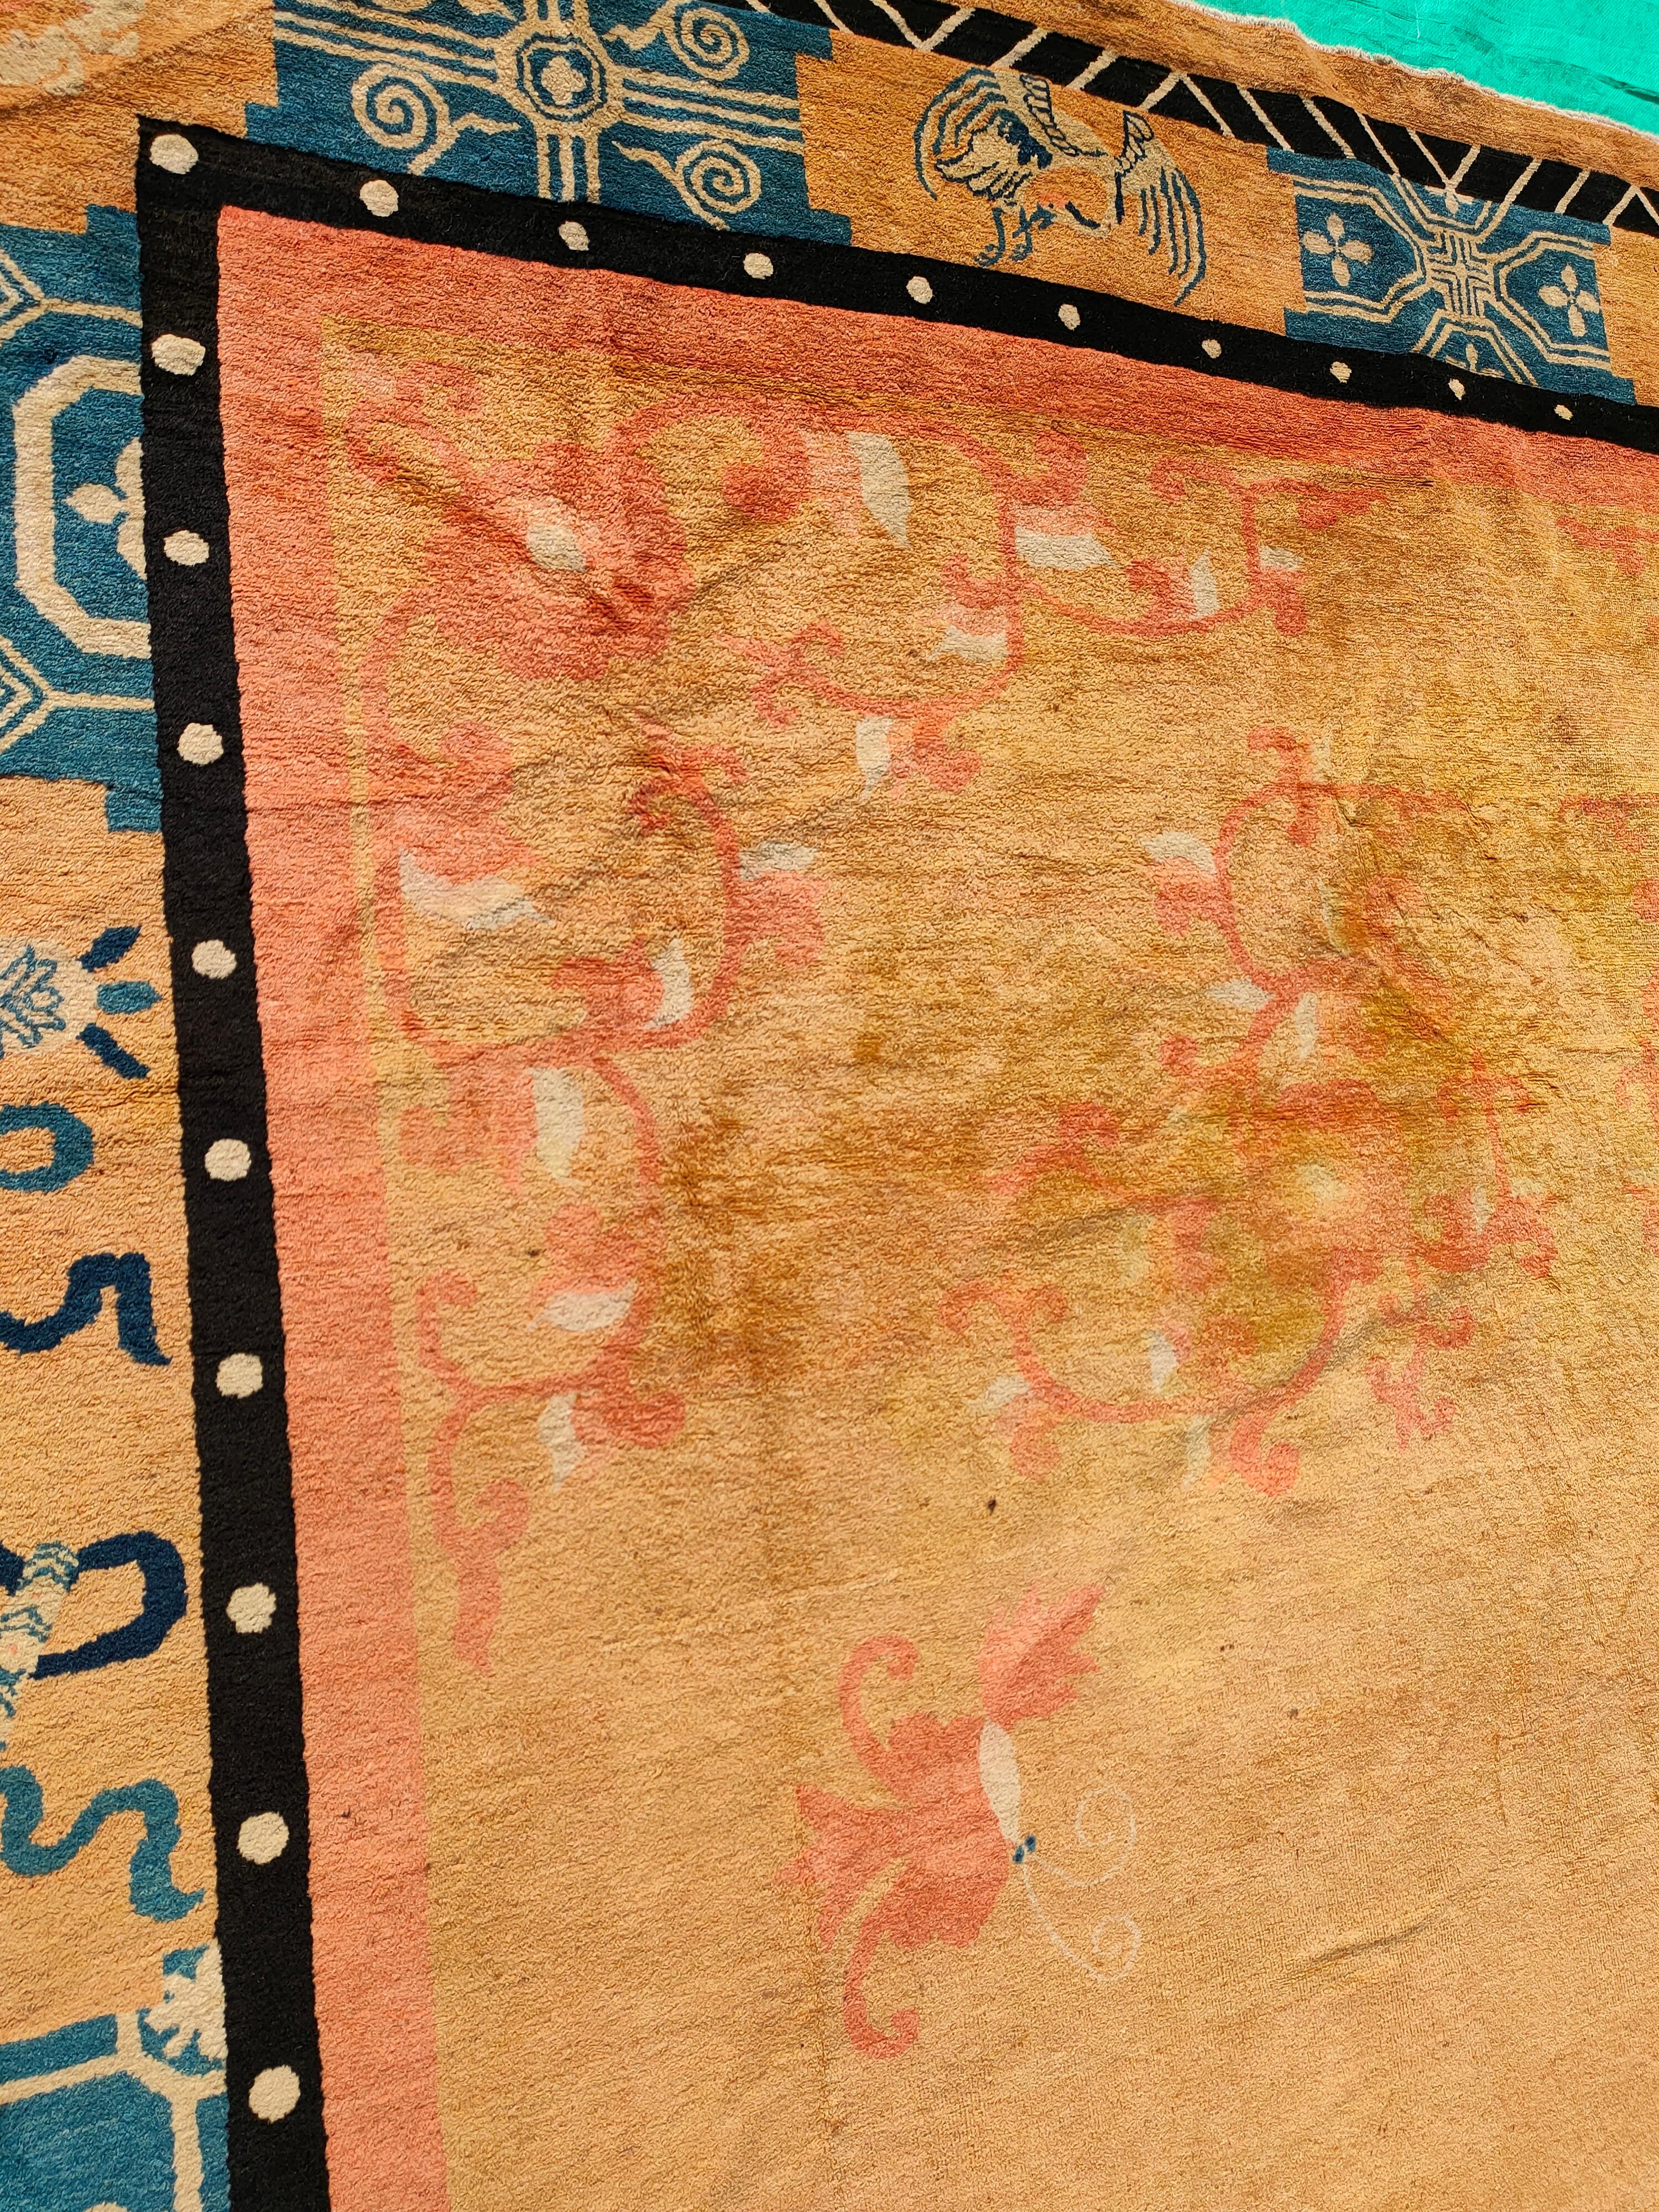 19th Century Chinese Peking Carpet ( 10' x 11'6